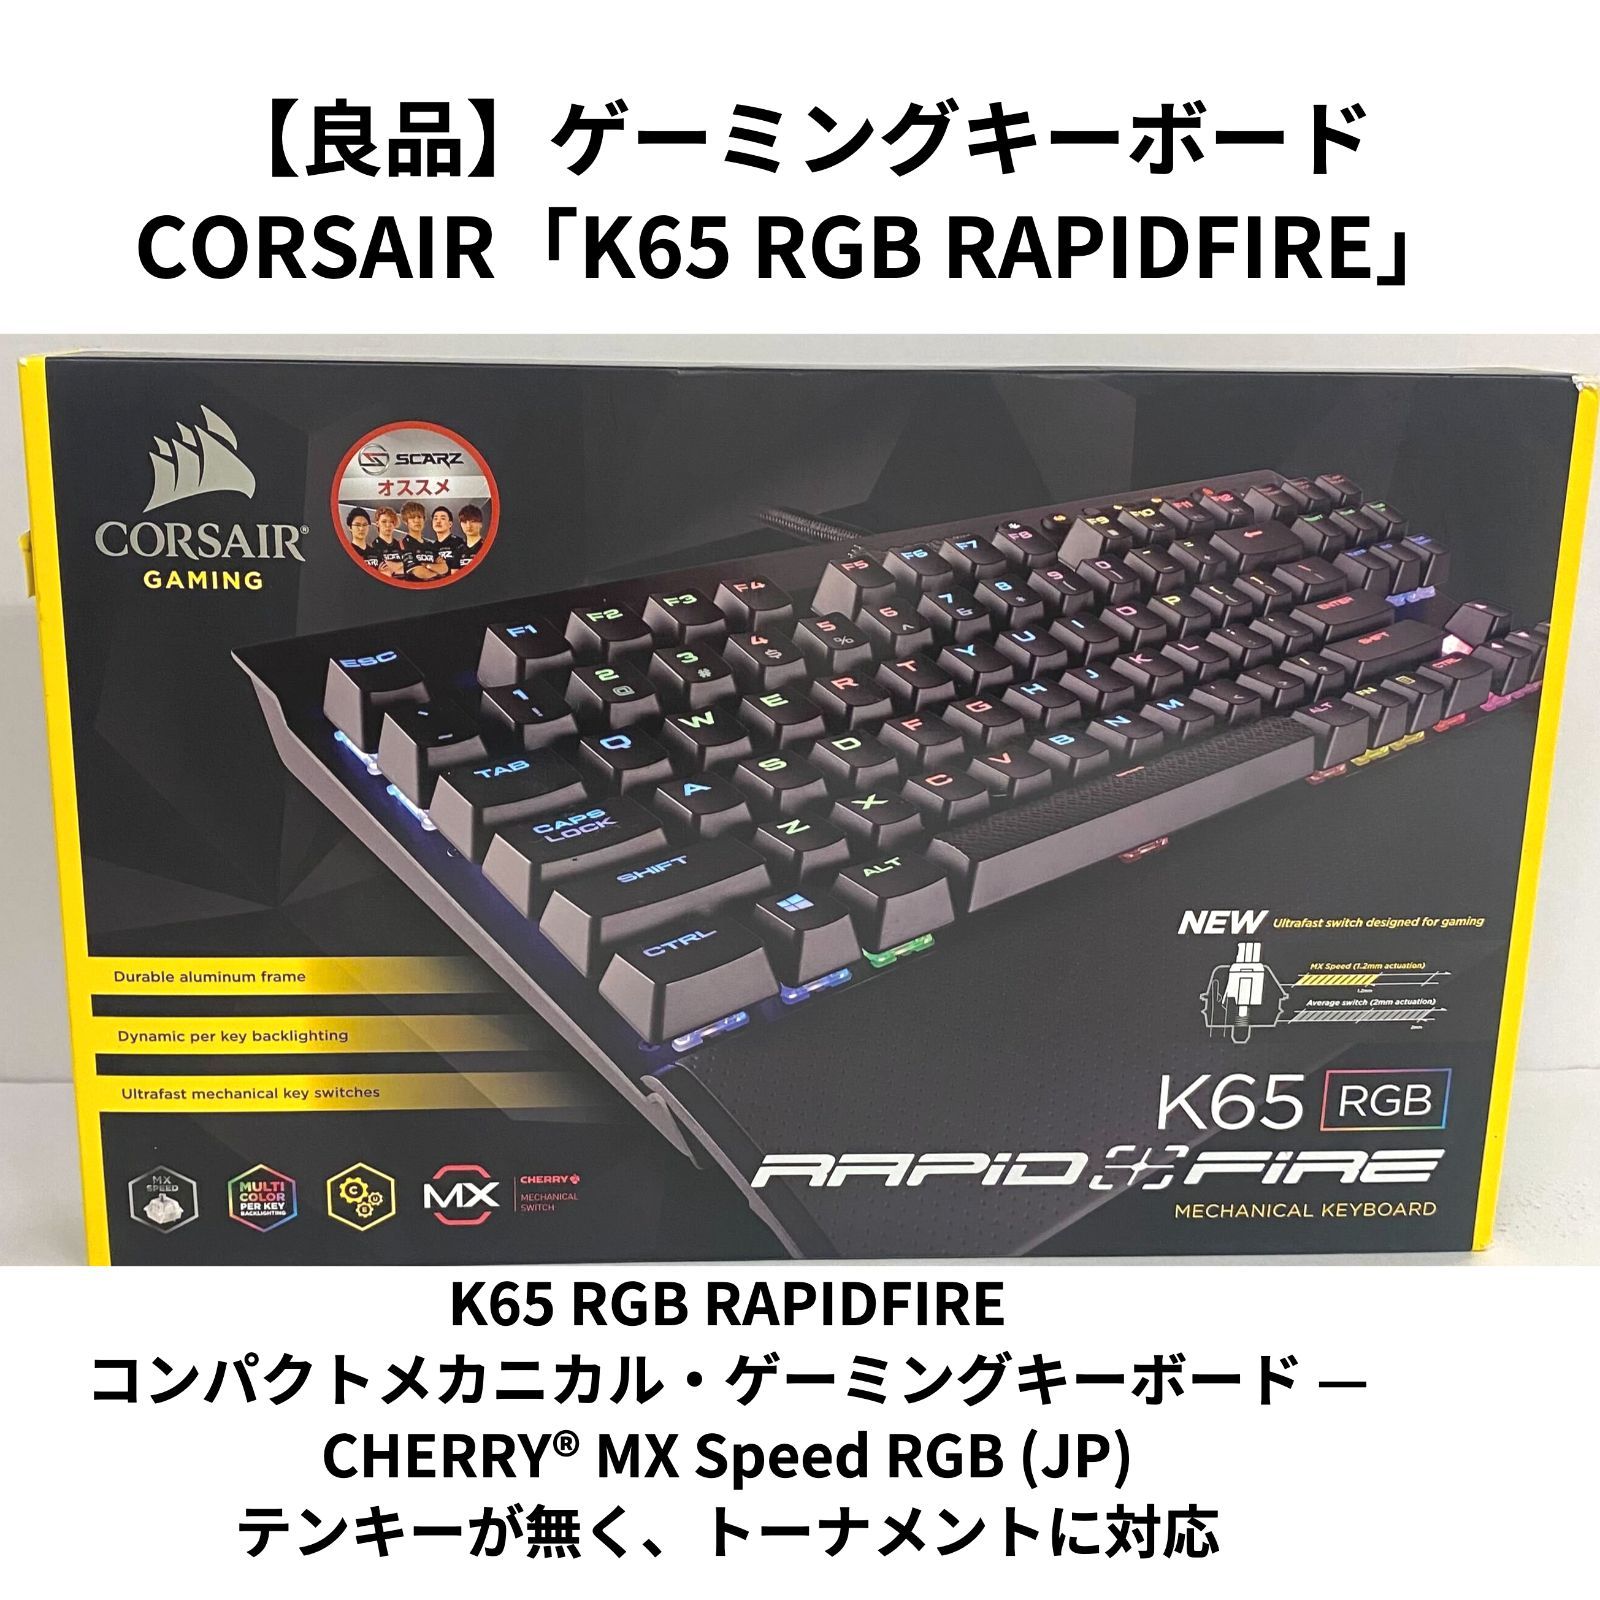 CORSAIR K65 RGB RAPID FiRE